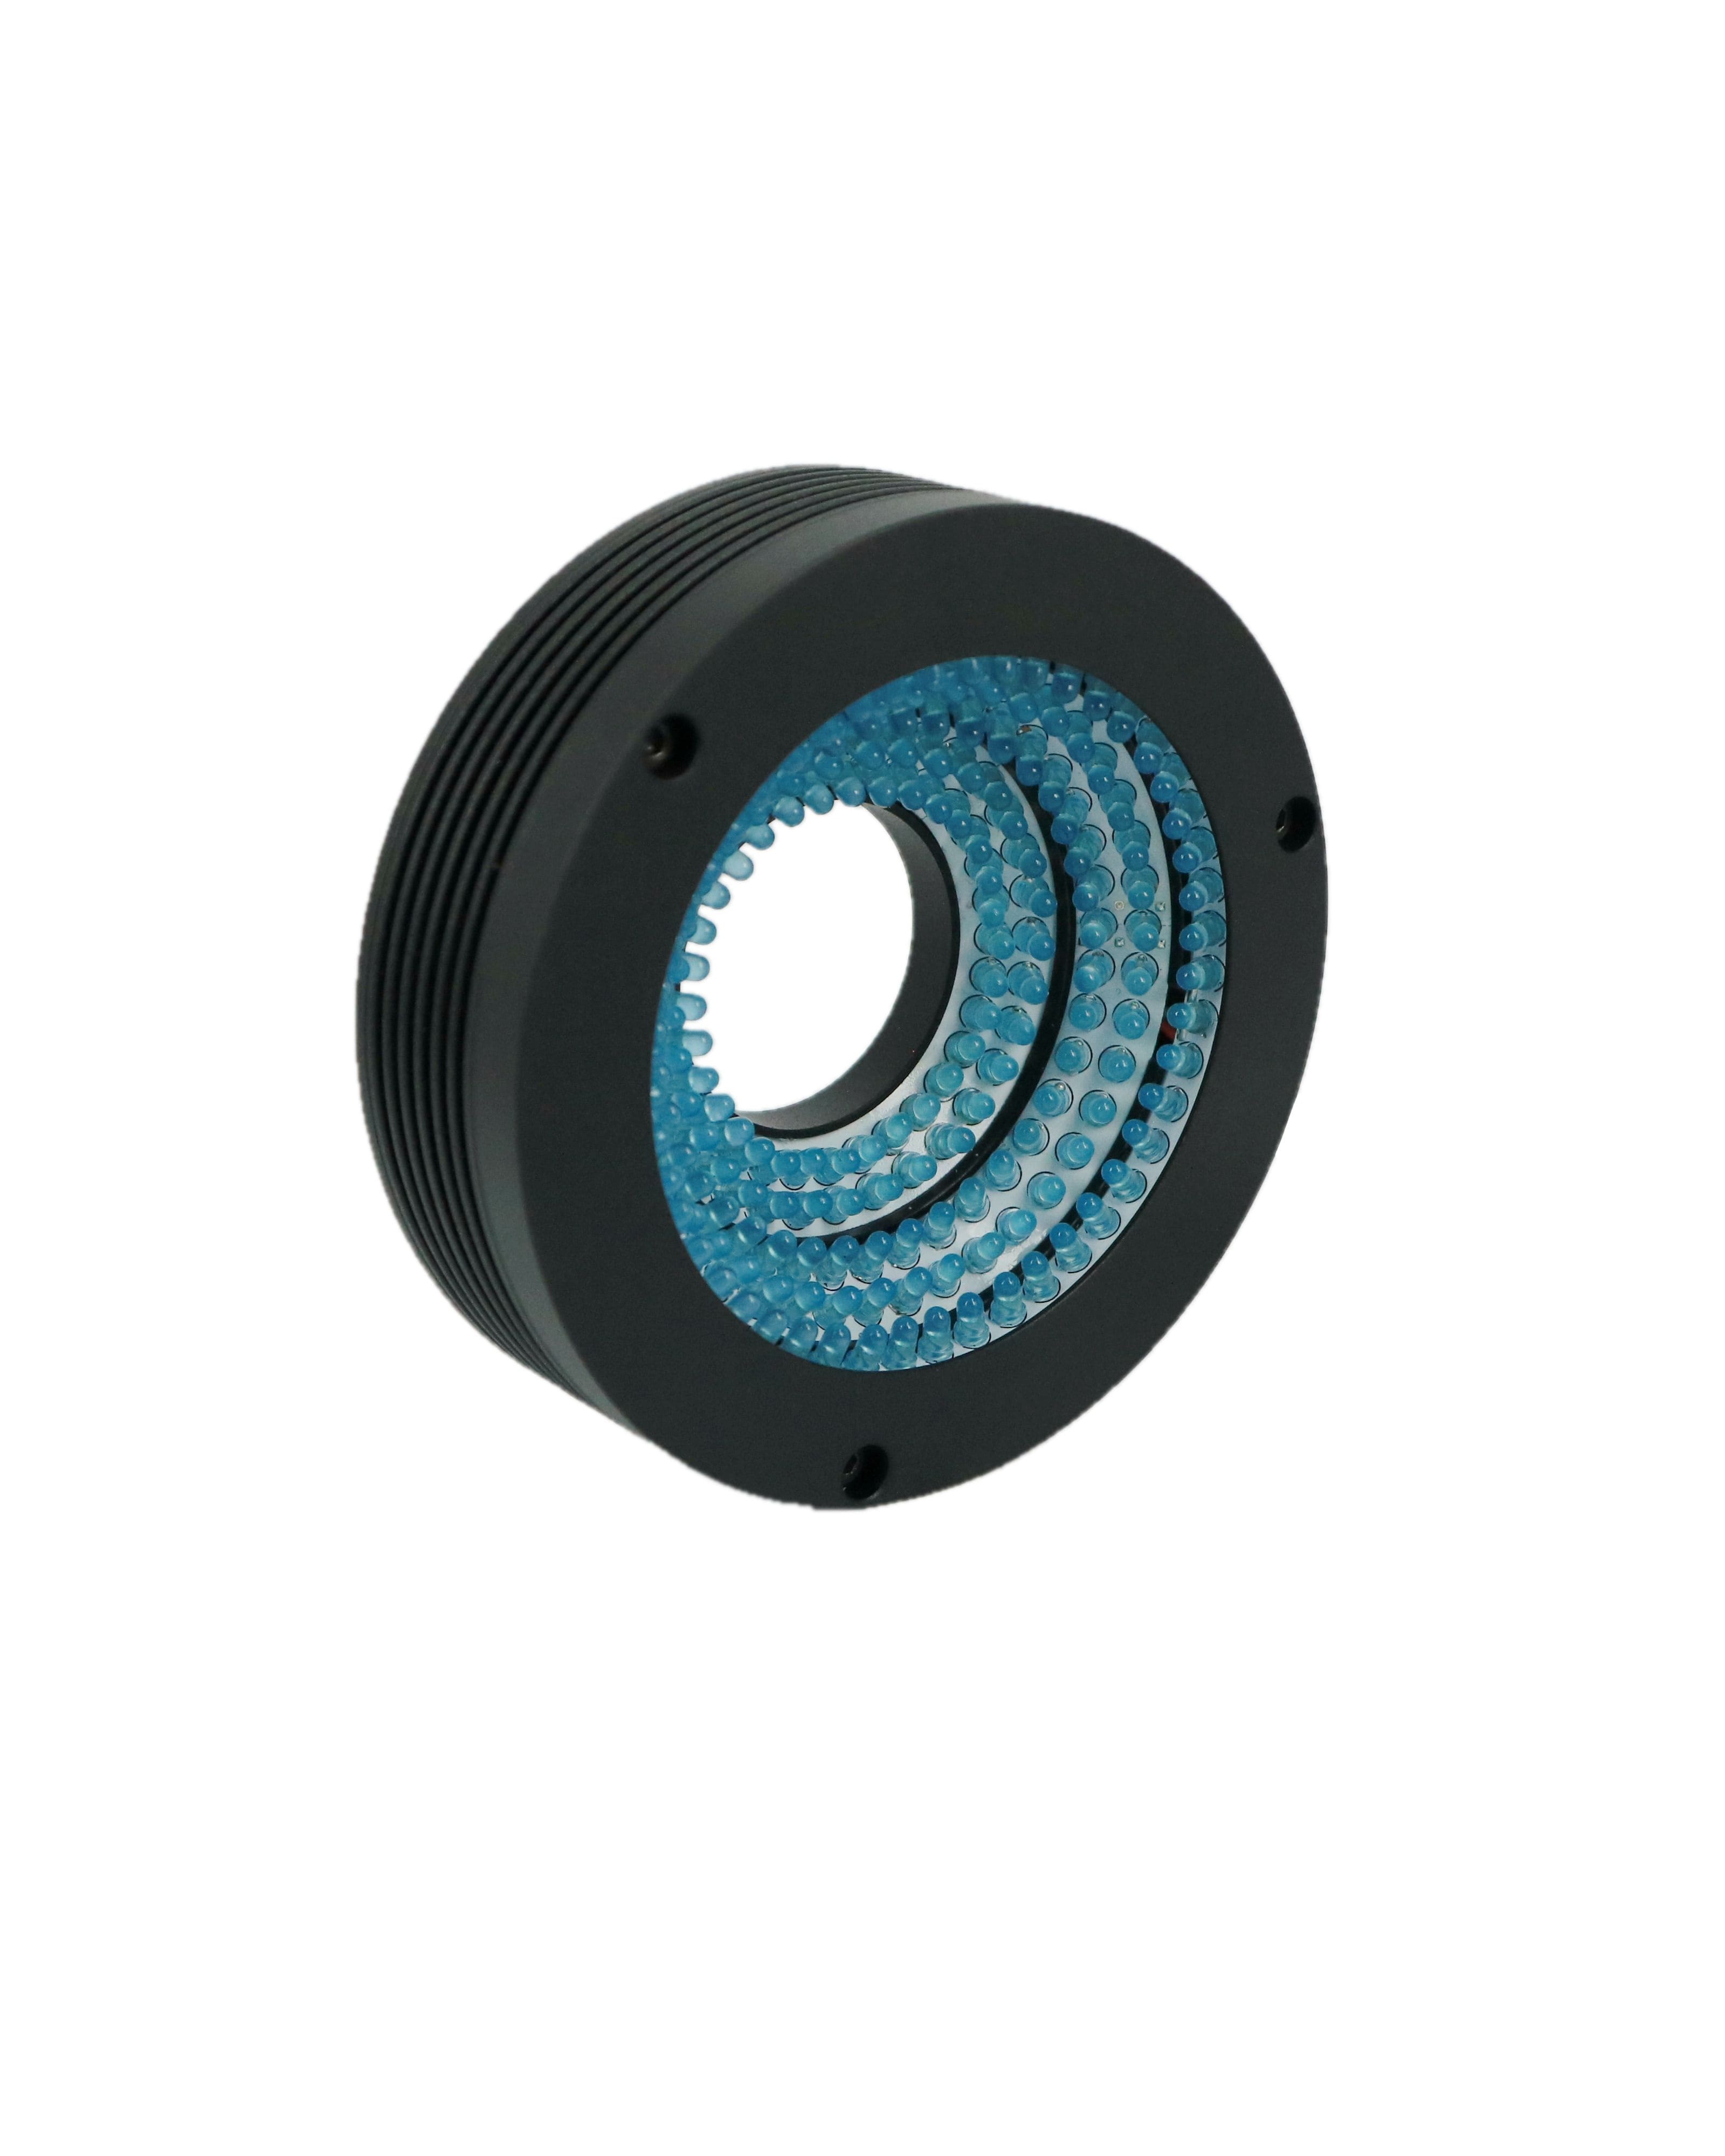 MADR-105/36 Multi-Angle Direct Ring Illumination – Blue